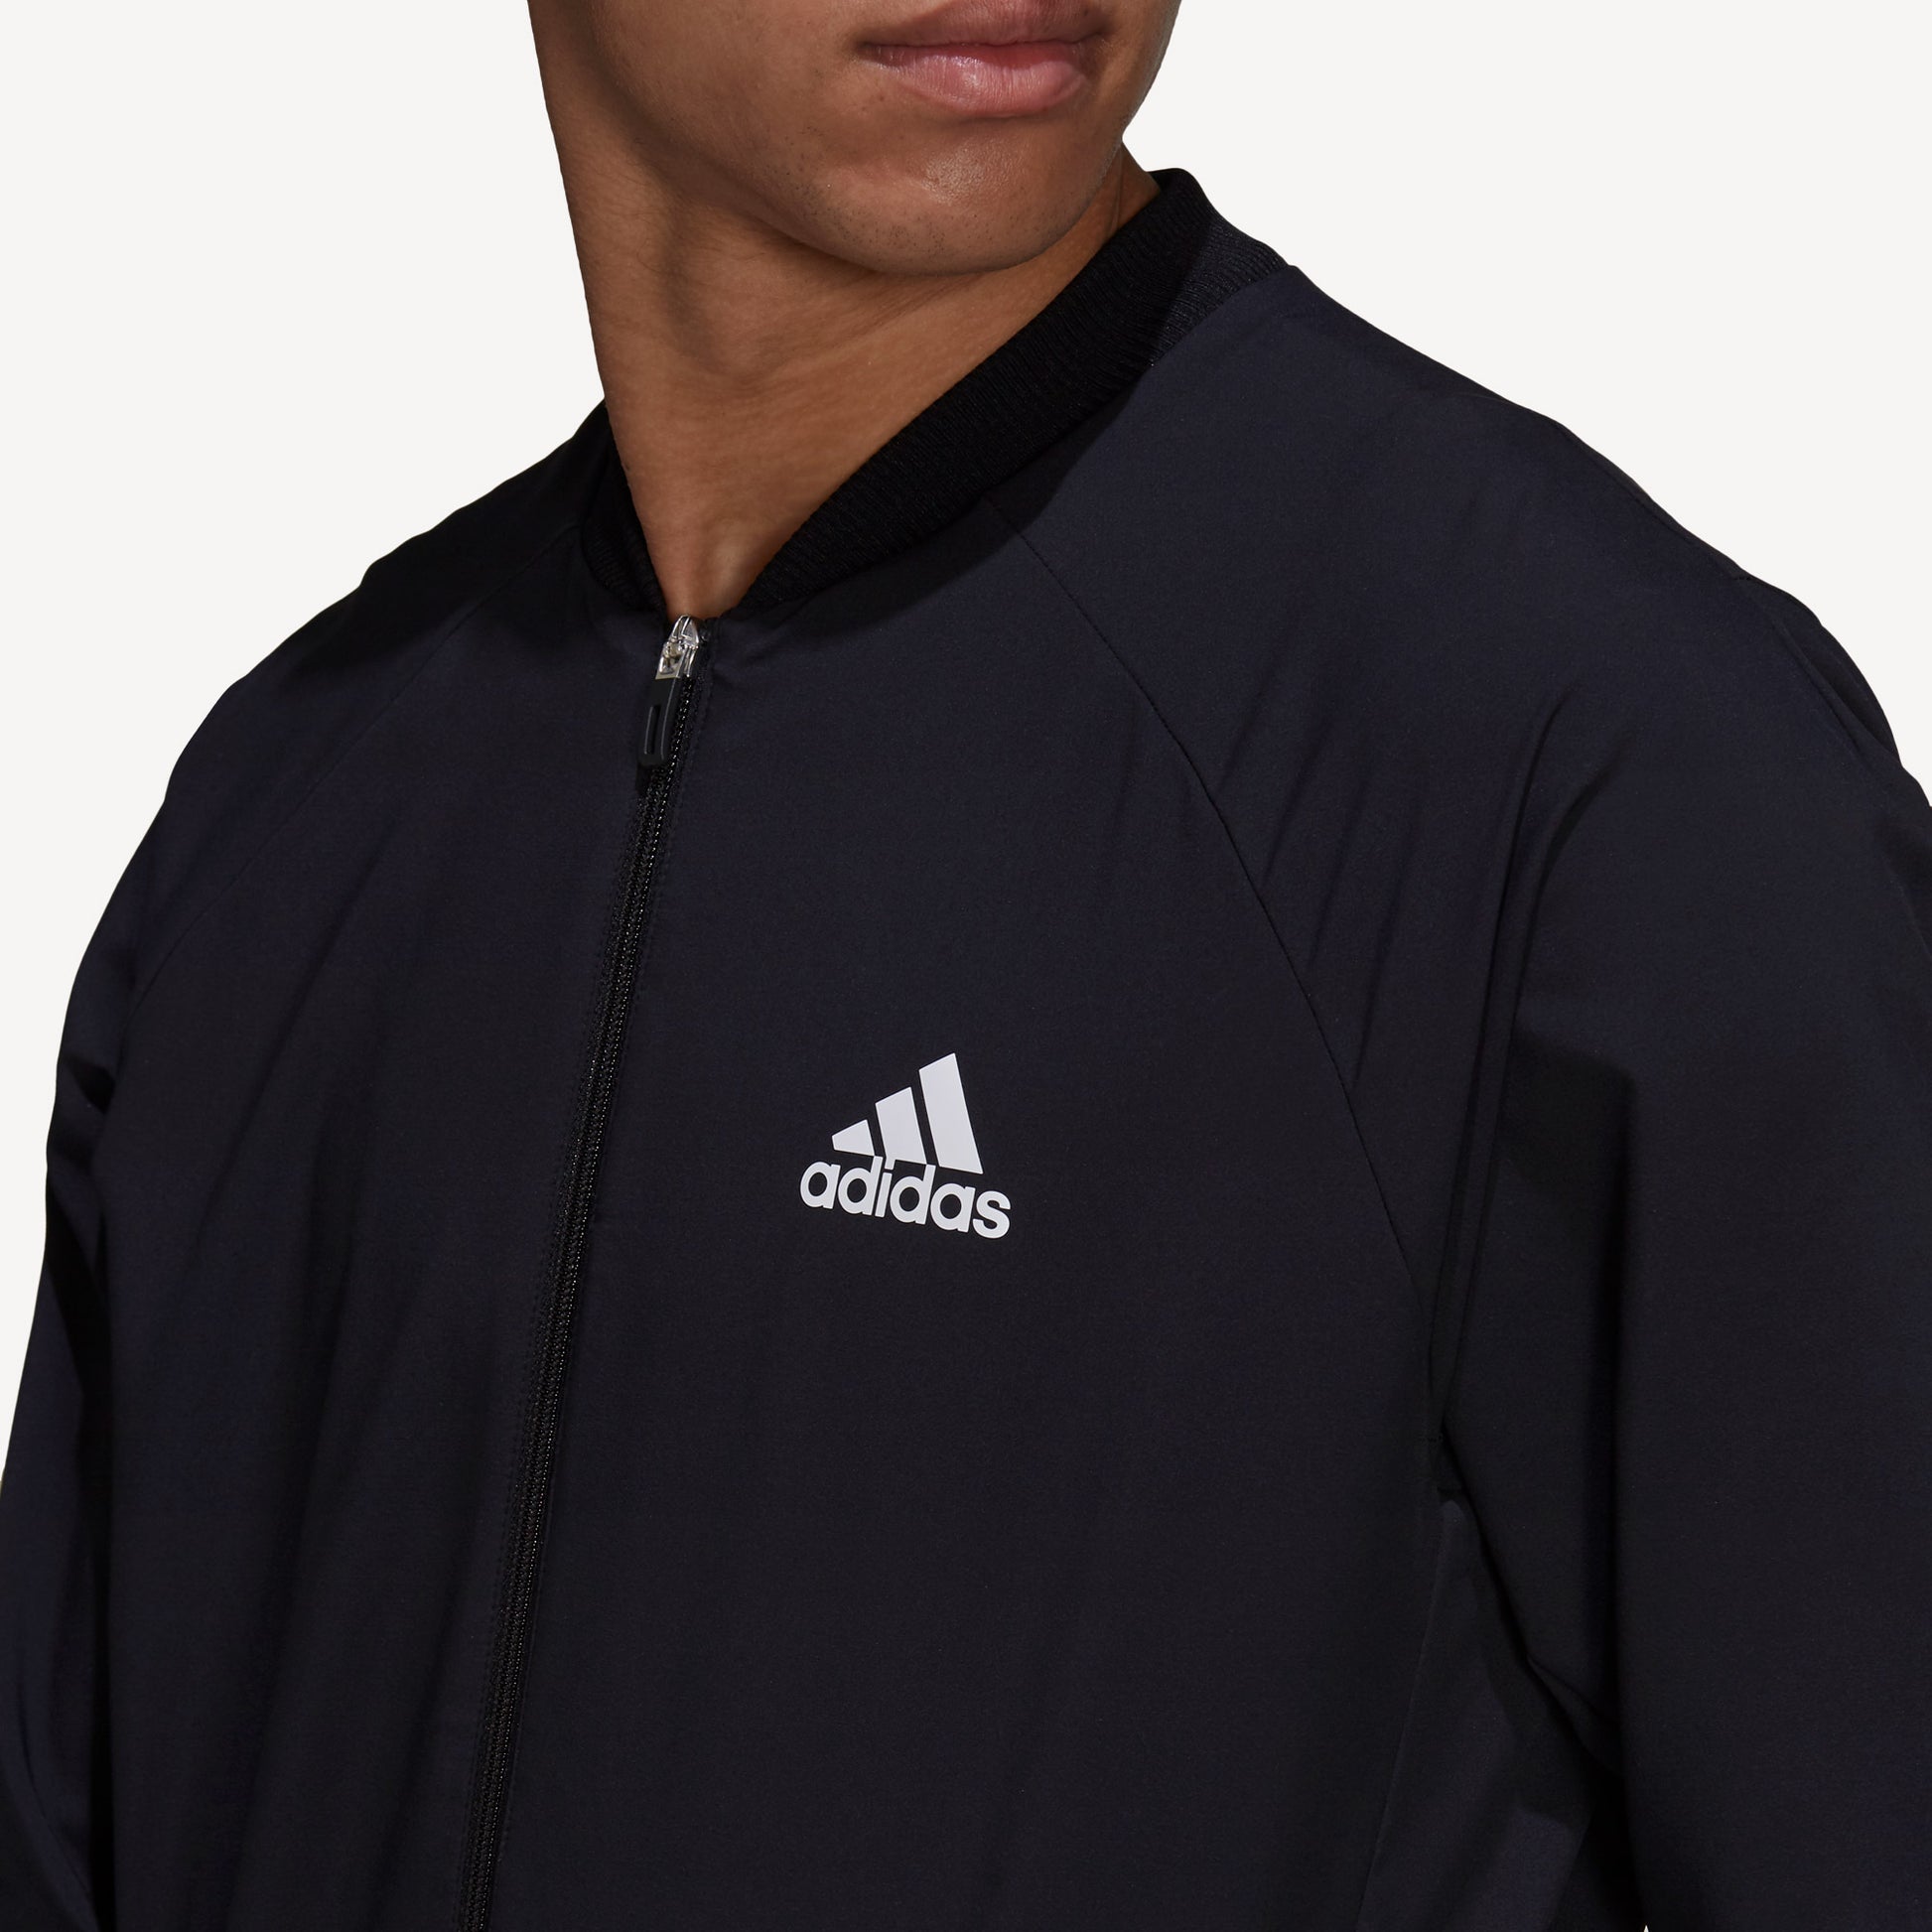 adidas Primeblue Men's Stretch Woven Tennis Jacket Black (4)